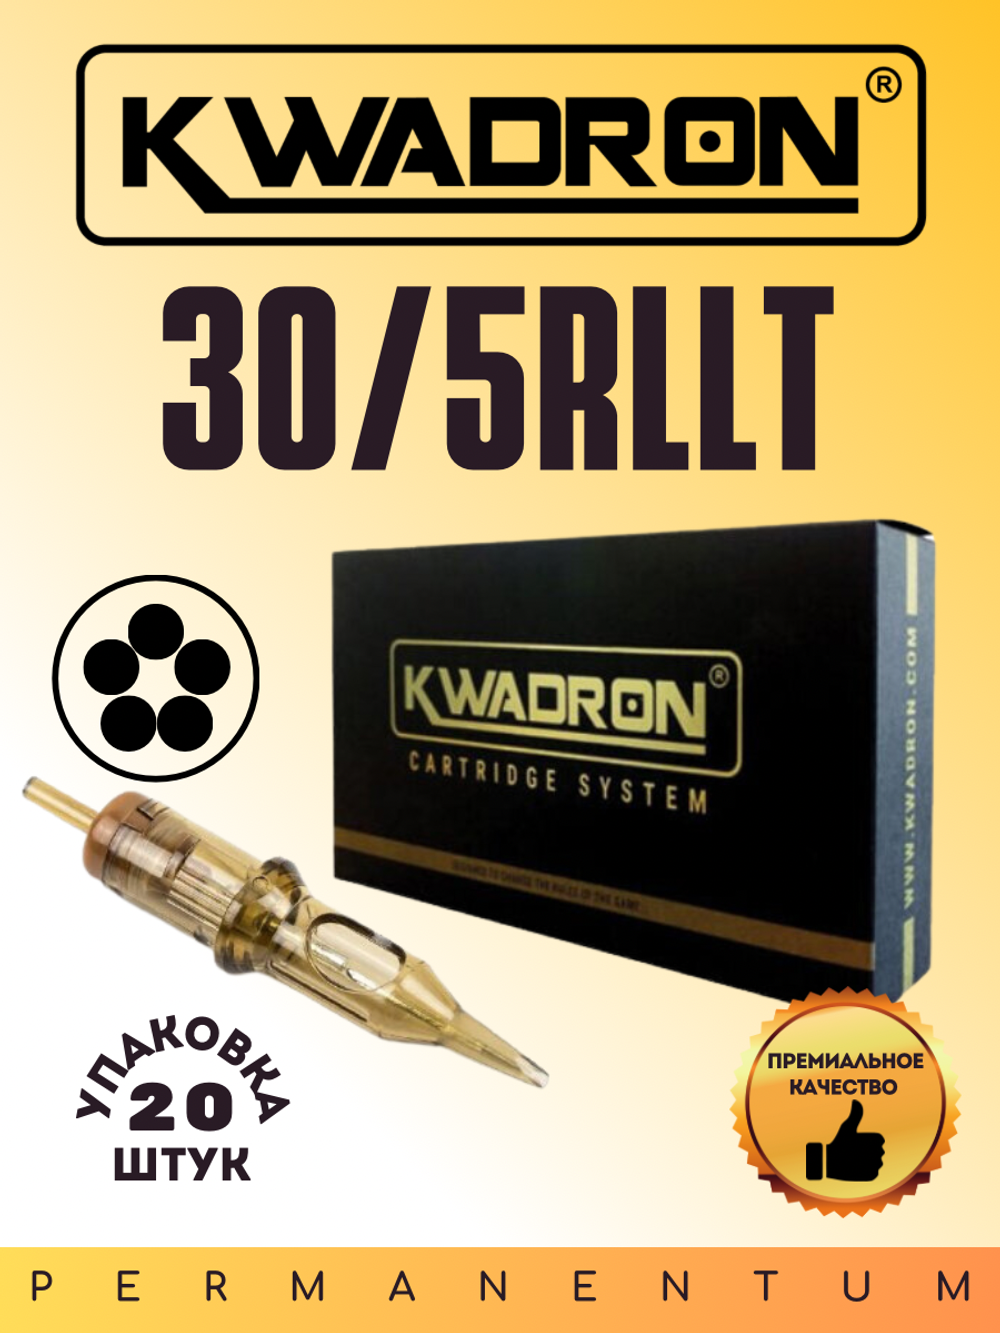 Картридж для татуажа "KWADRON Round Liner 30/5RLLT" упаковка 20 шт.